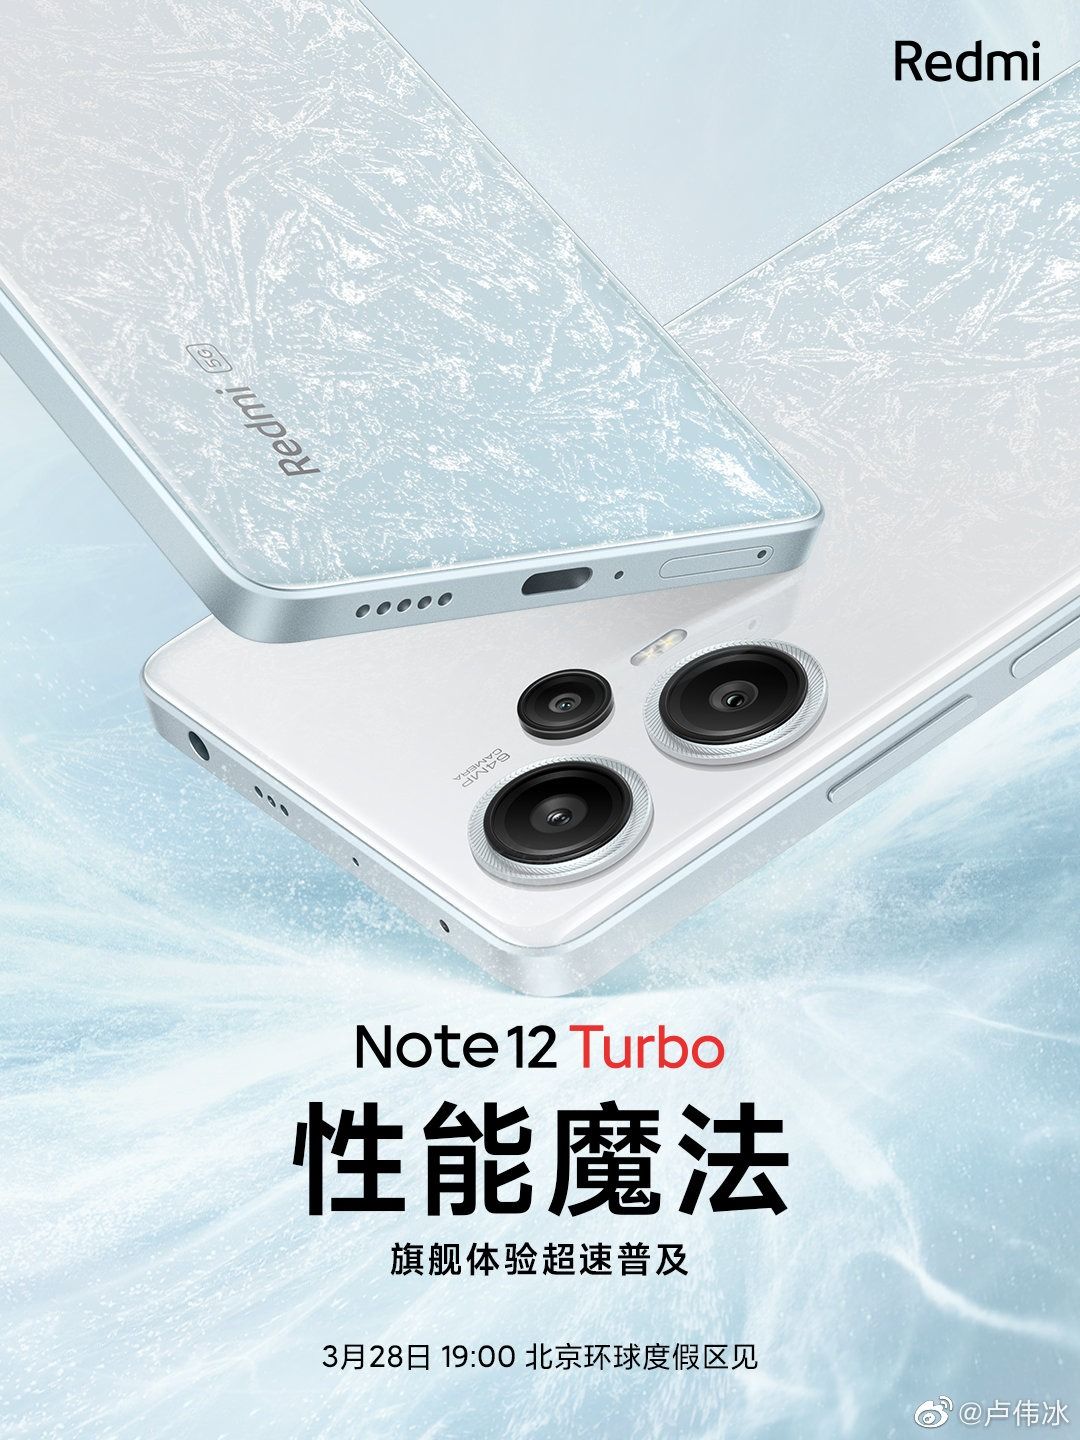 Redmi Note 12 Turbo 5G